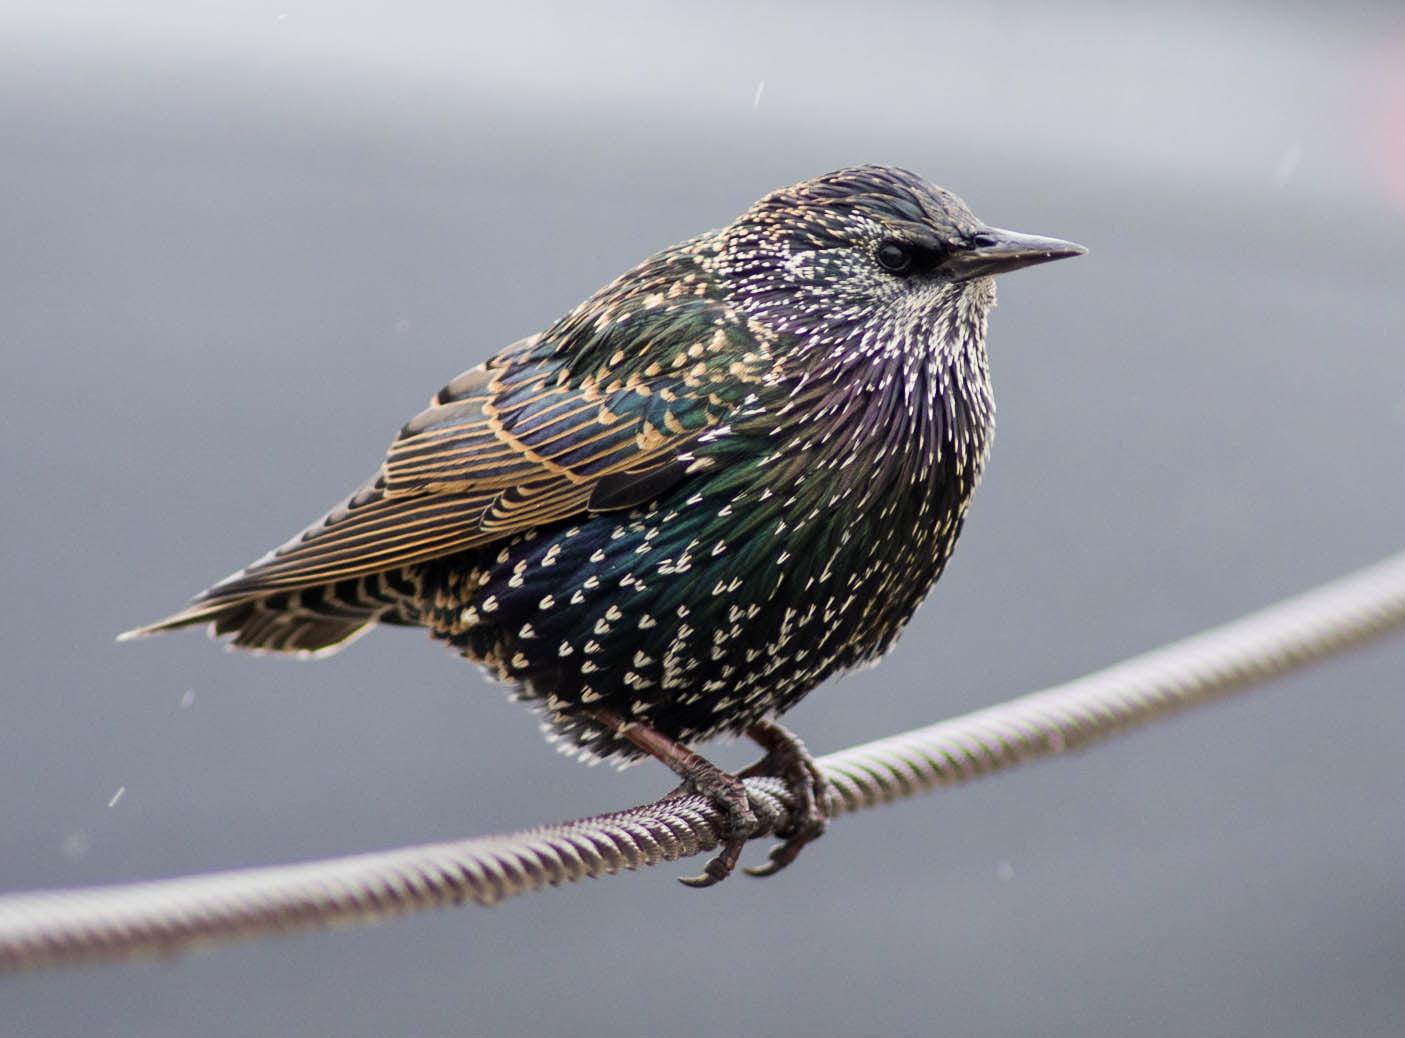 Green and black short beak bird perching on wire, european